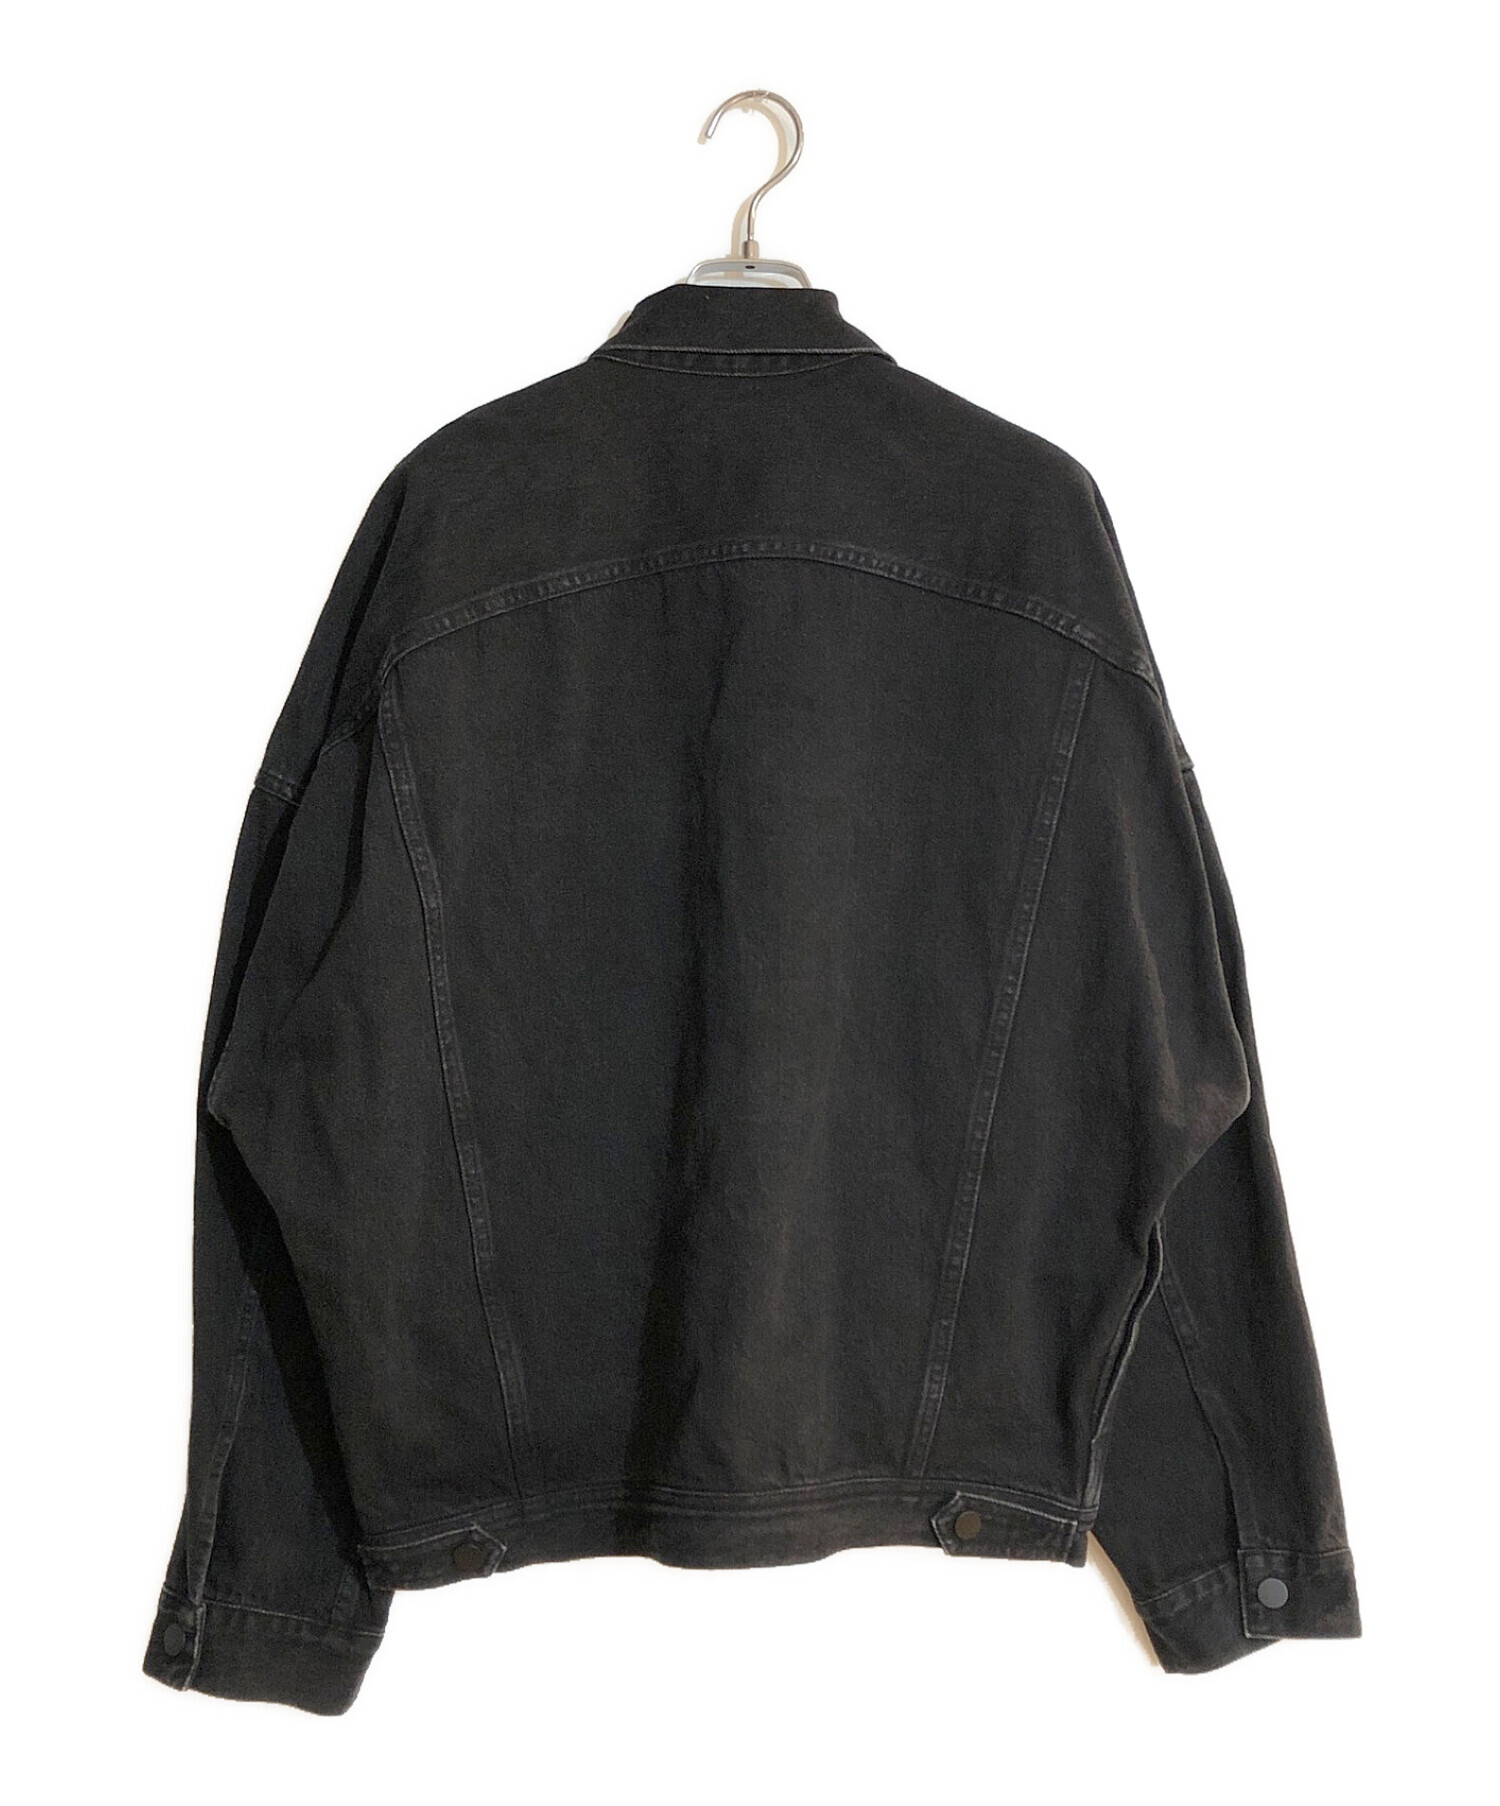 AP STUDIO (エーピーストゥディオ) ブラックオーバーサイズデニムジャケット ブラック サイズ:表記なし